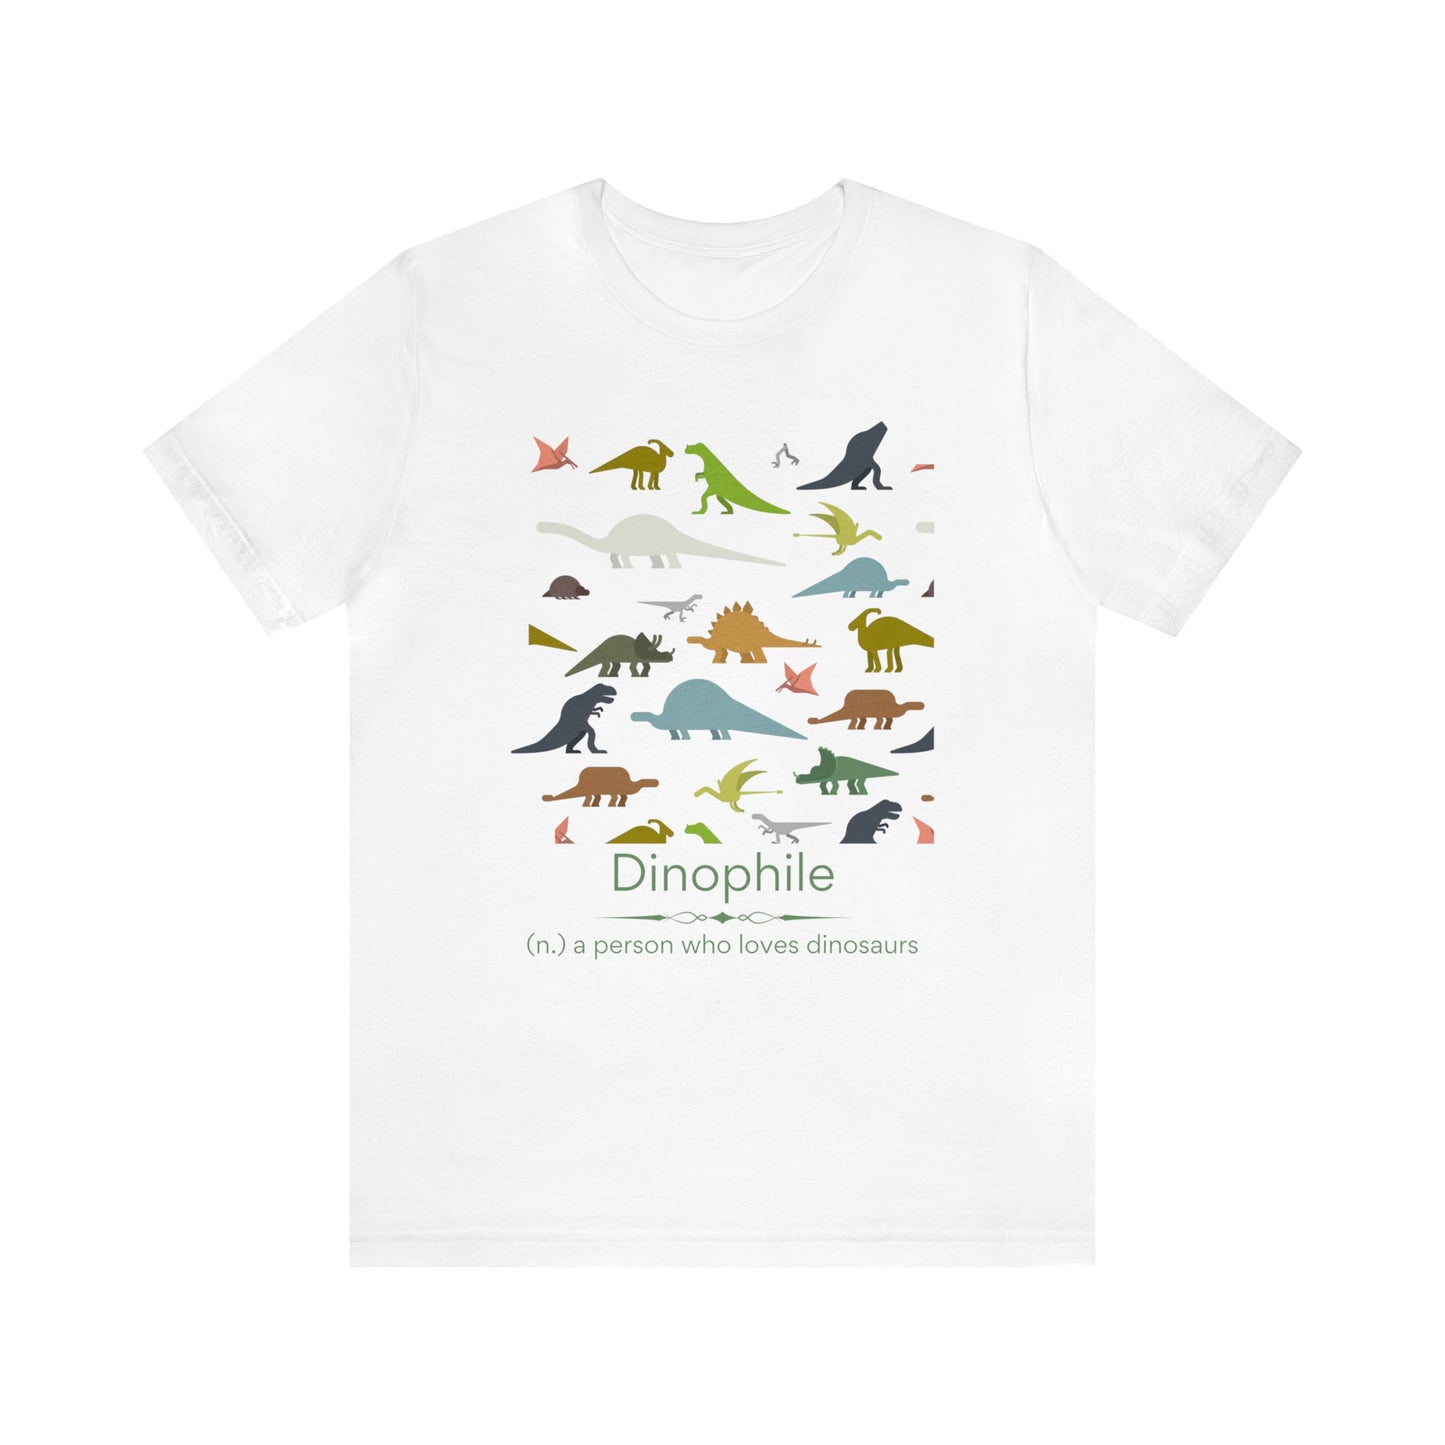 Dinophile - dinosaur lover T-shirt